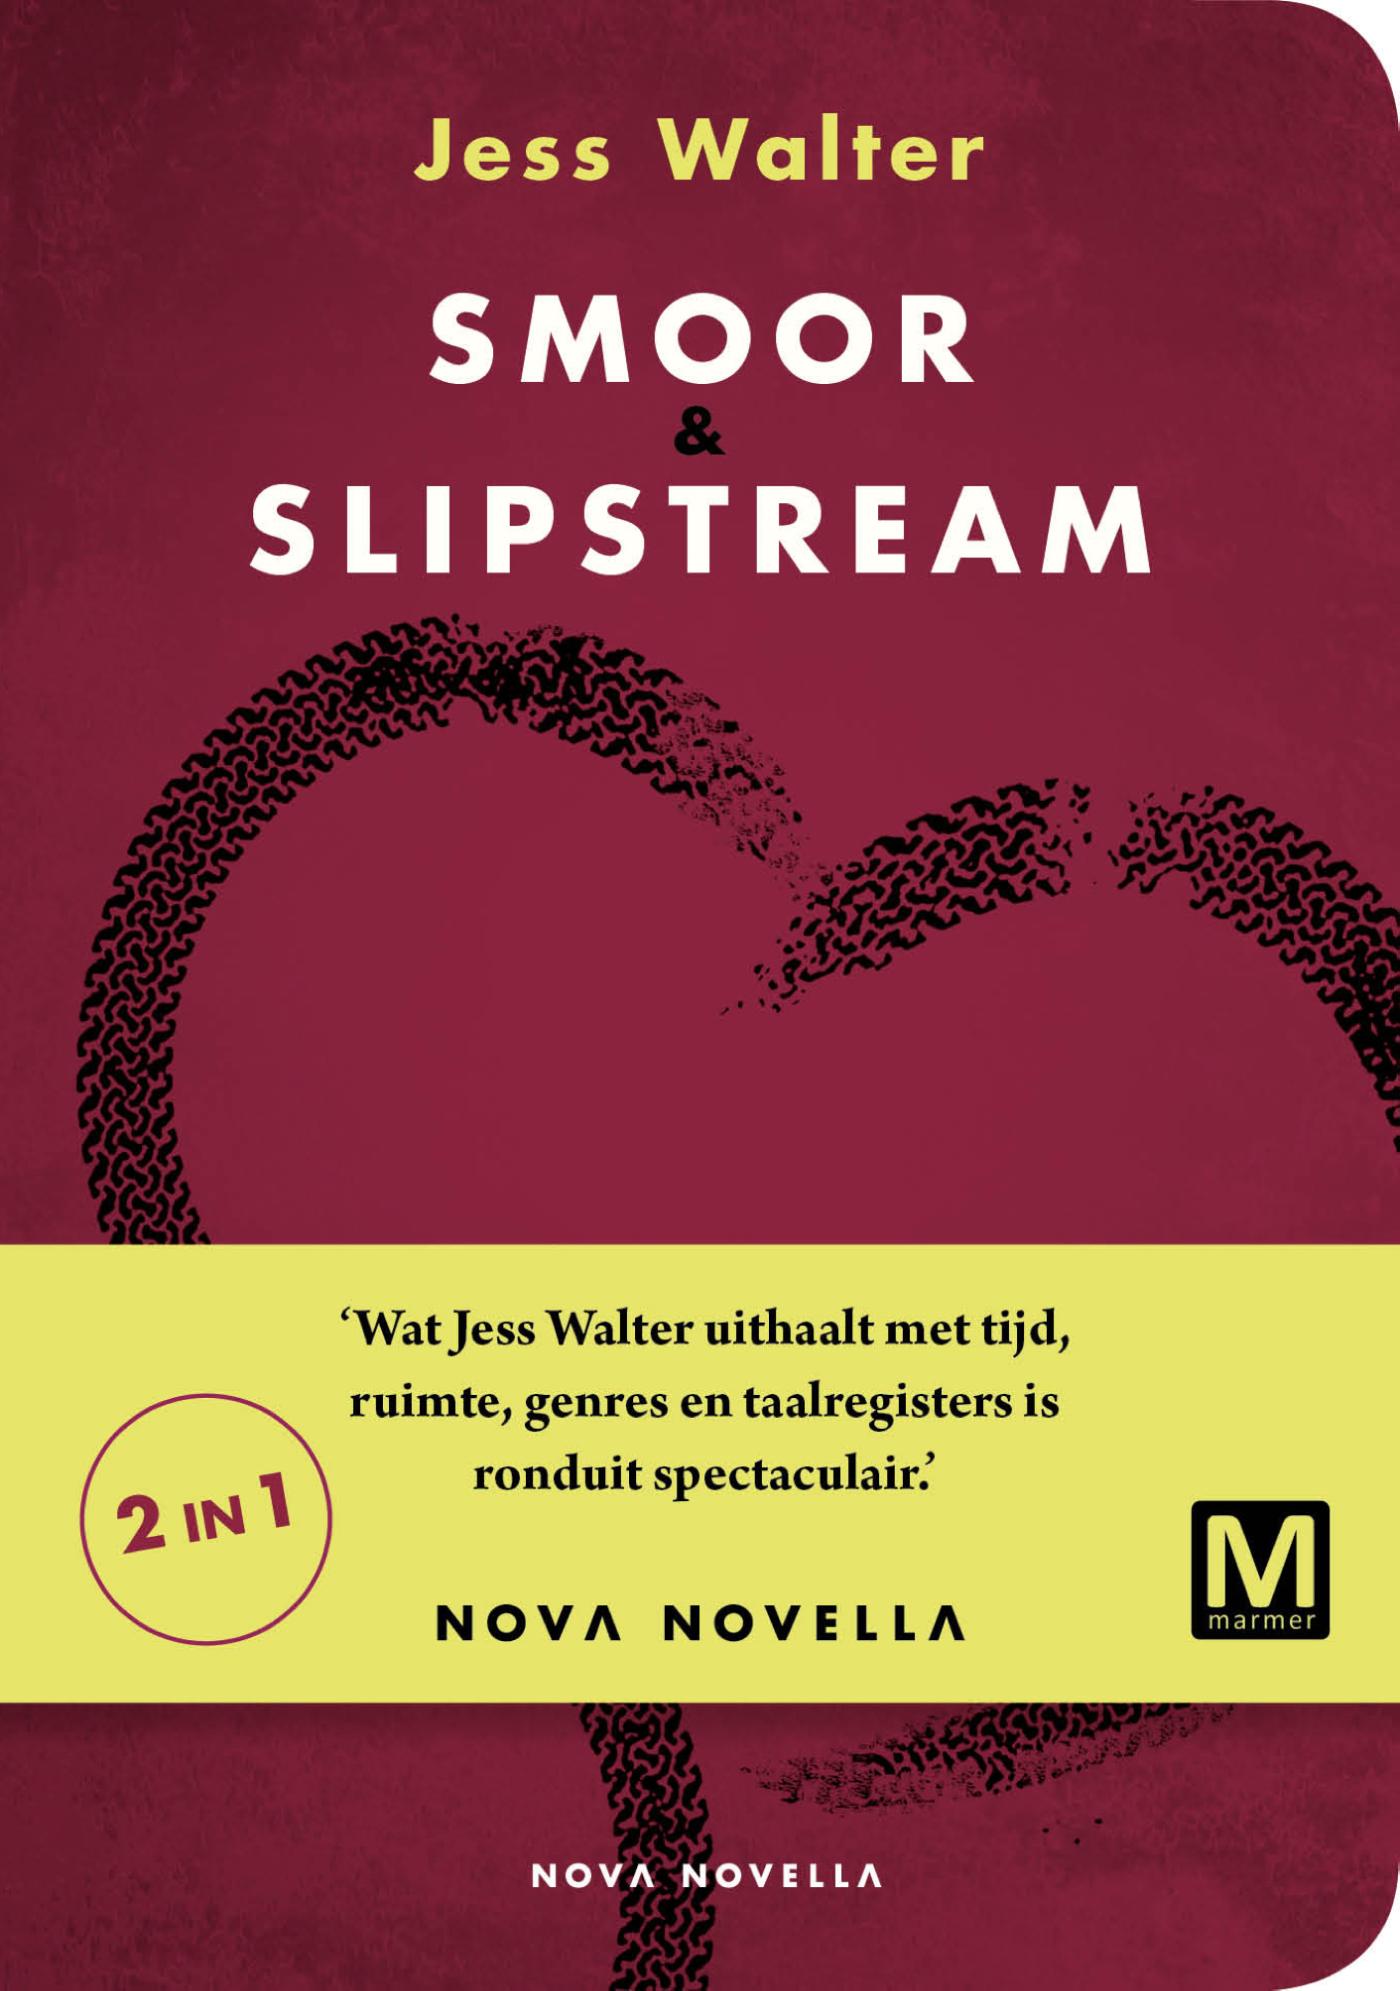 Smoor, slipstream (Ebook)